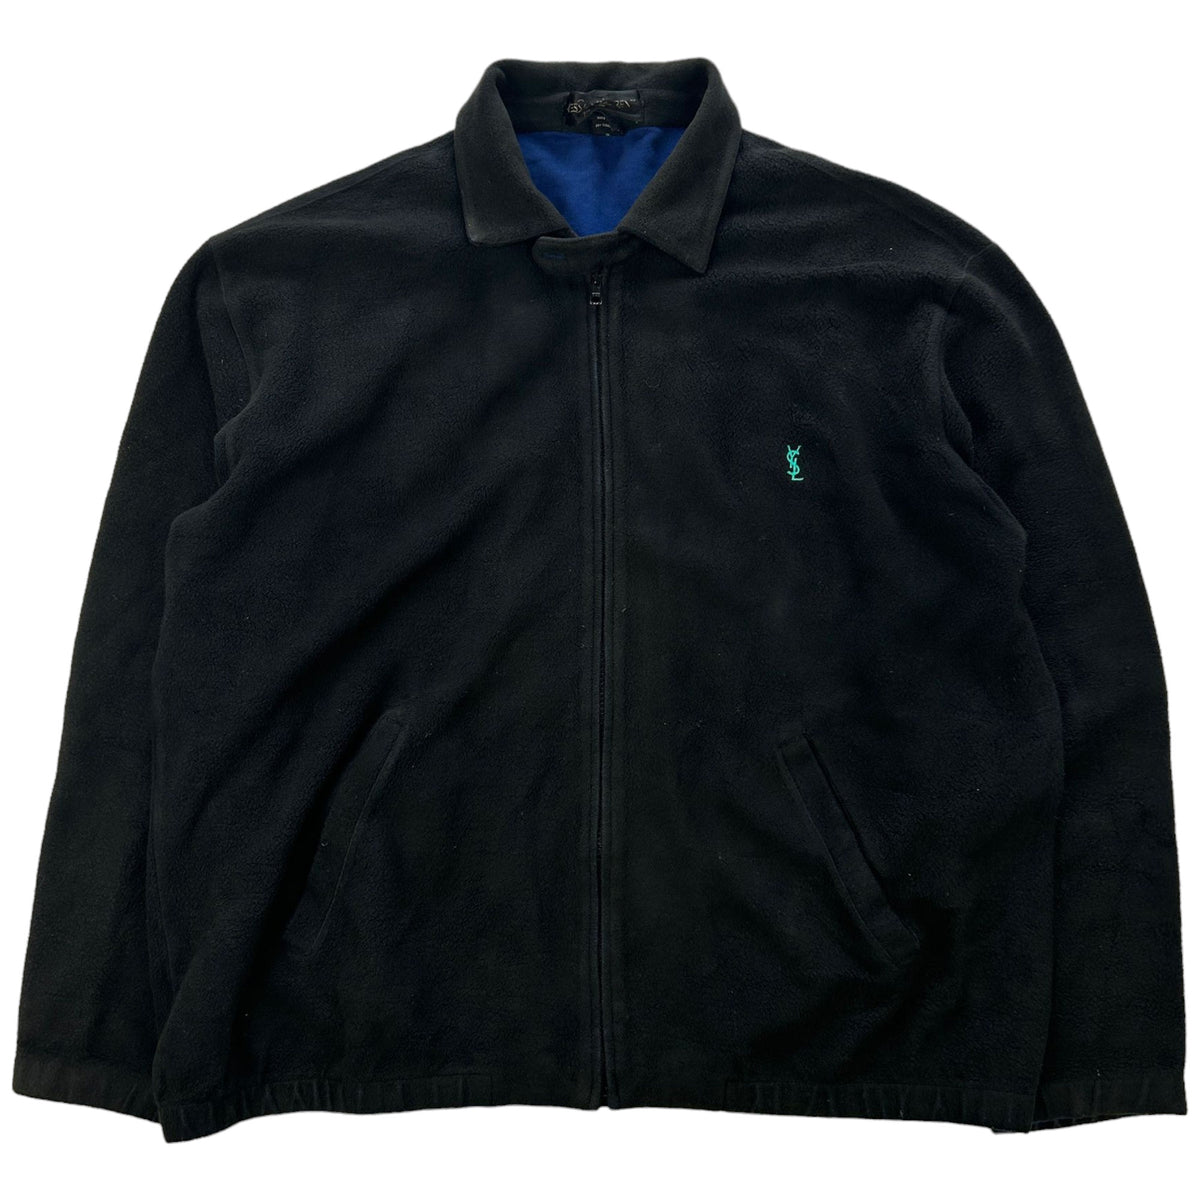 Vintage Yves Saint Laurent Fleece Jacket Size L